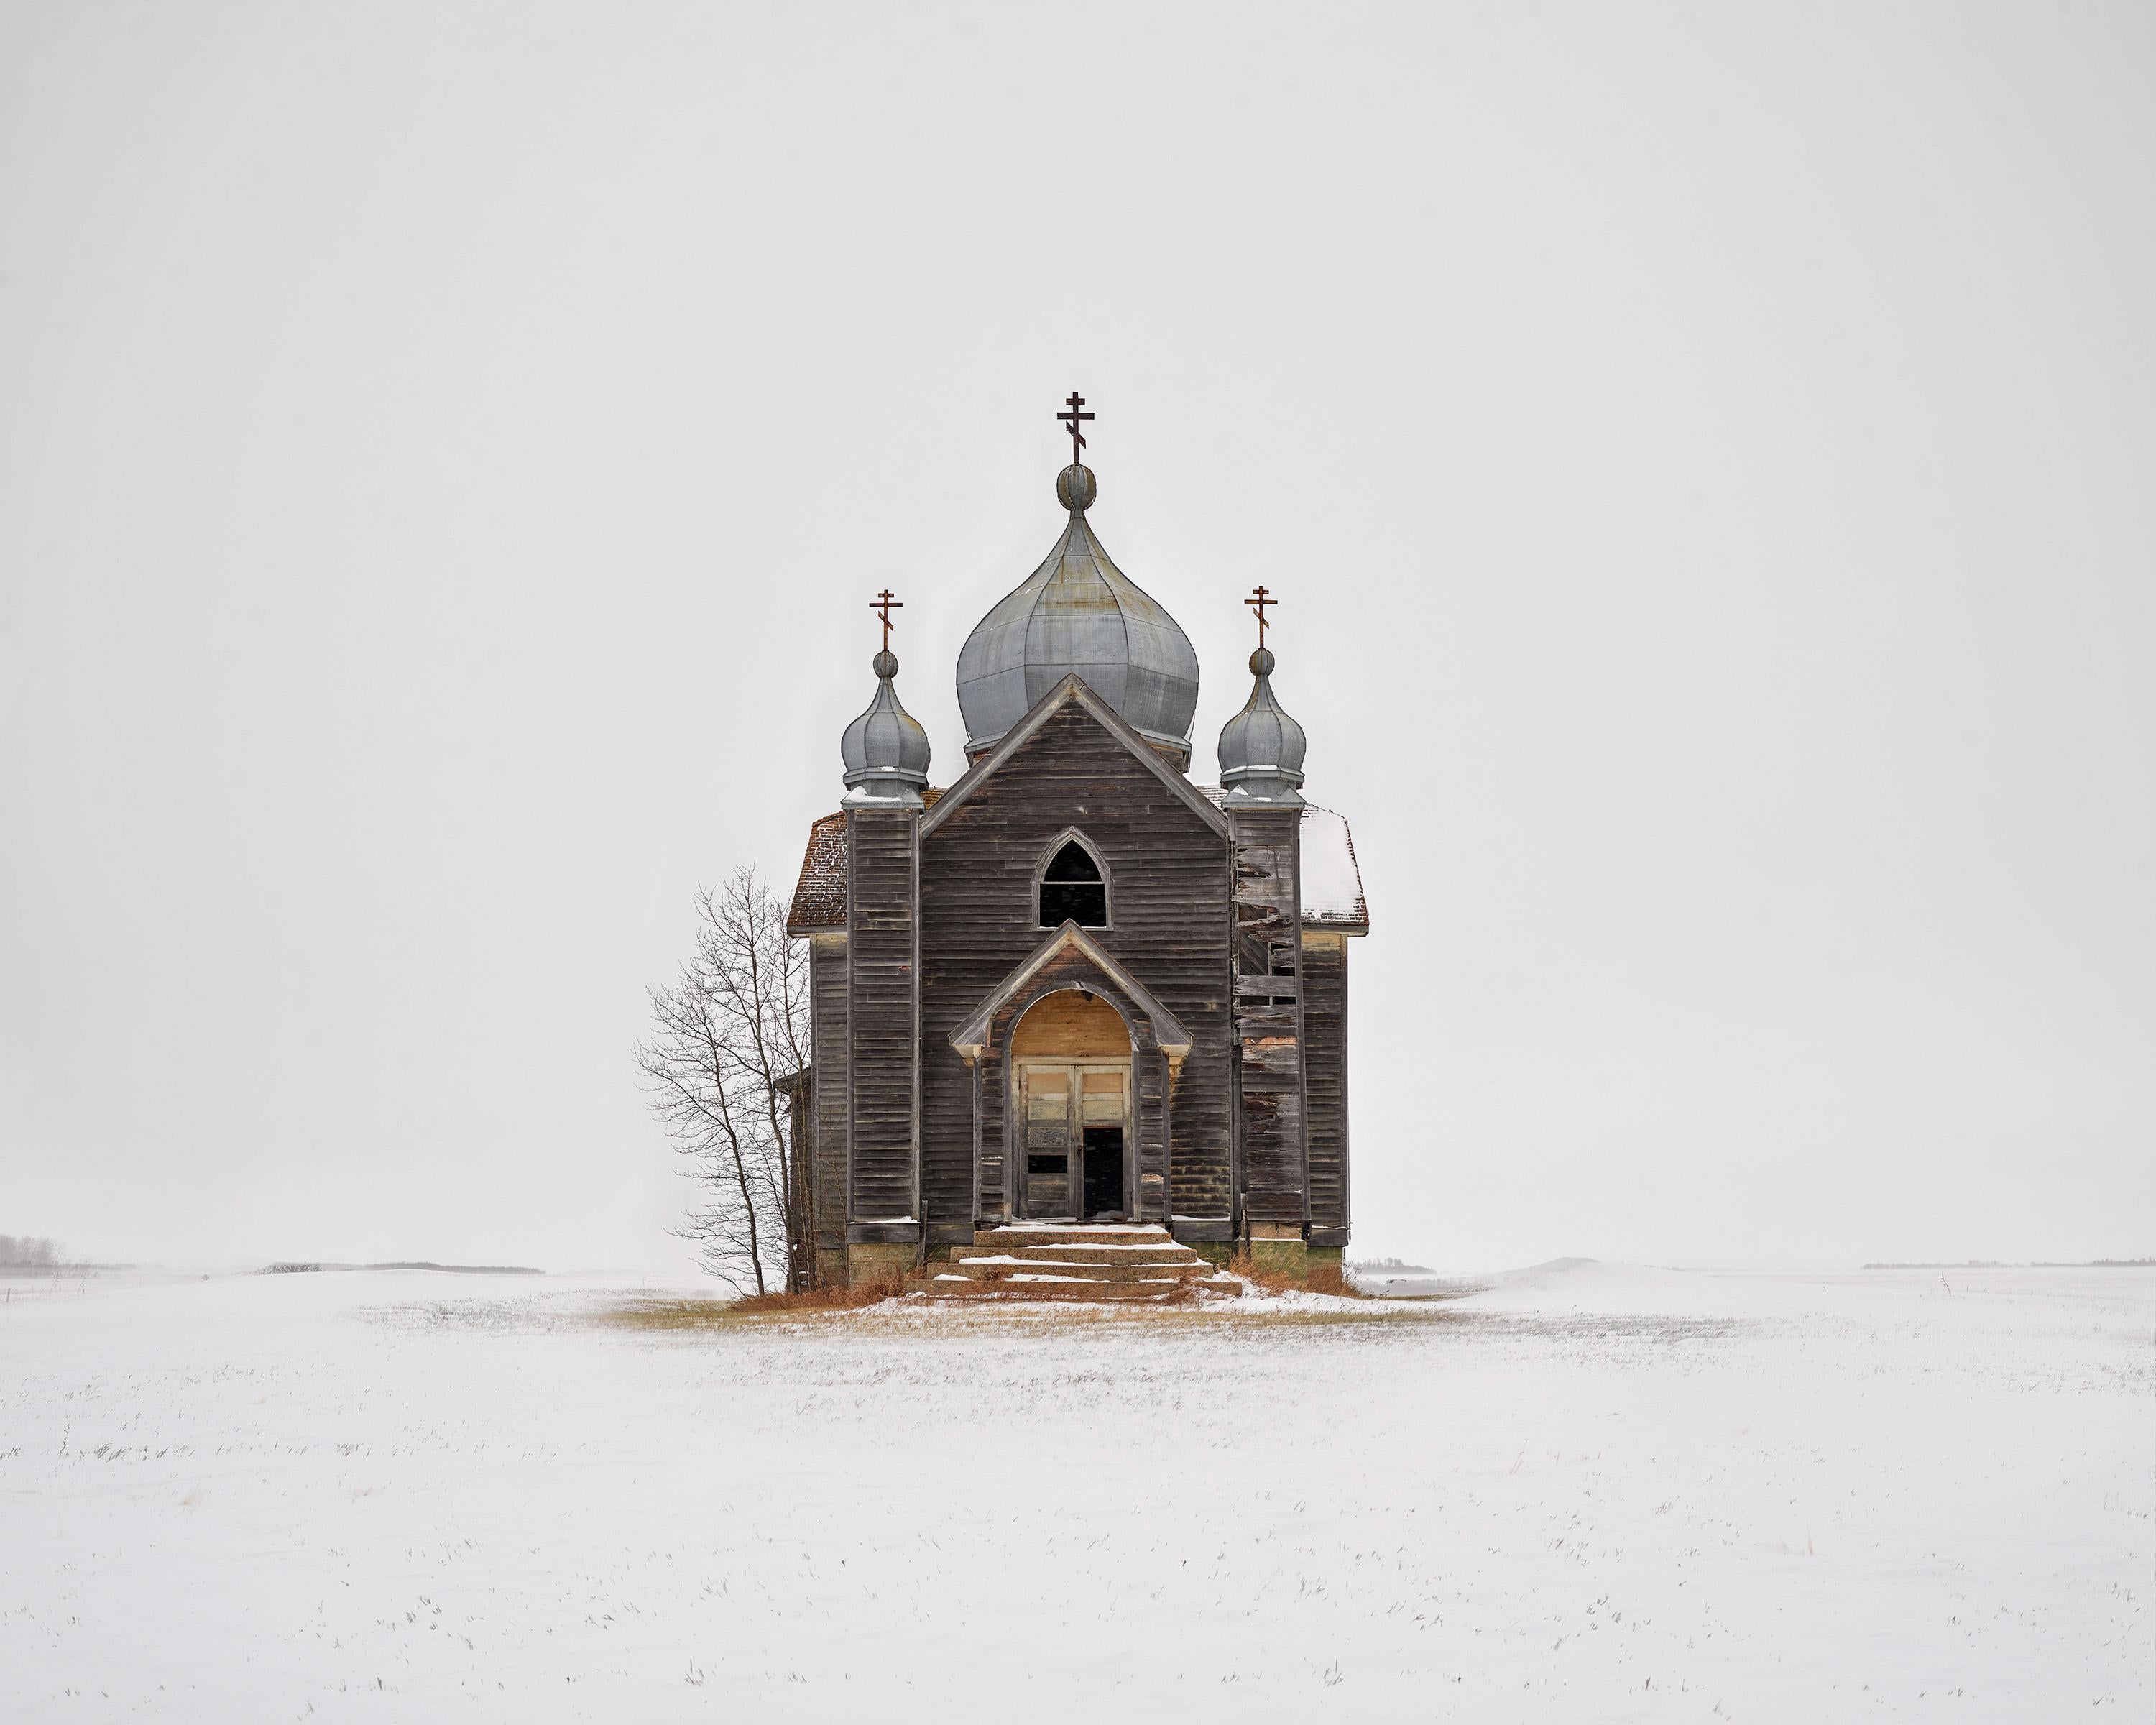 David Burdeny Landscape Photograph - Weathered Church- Landscape photograph unframed by david burdney 